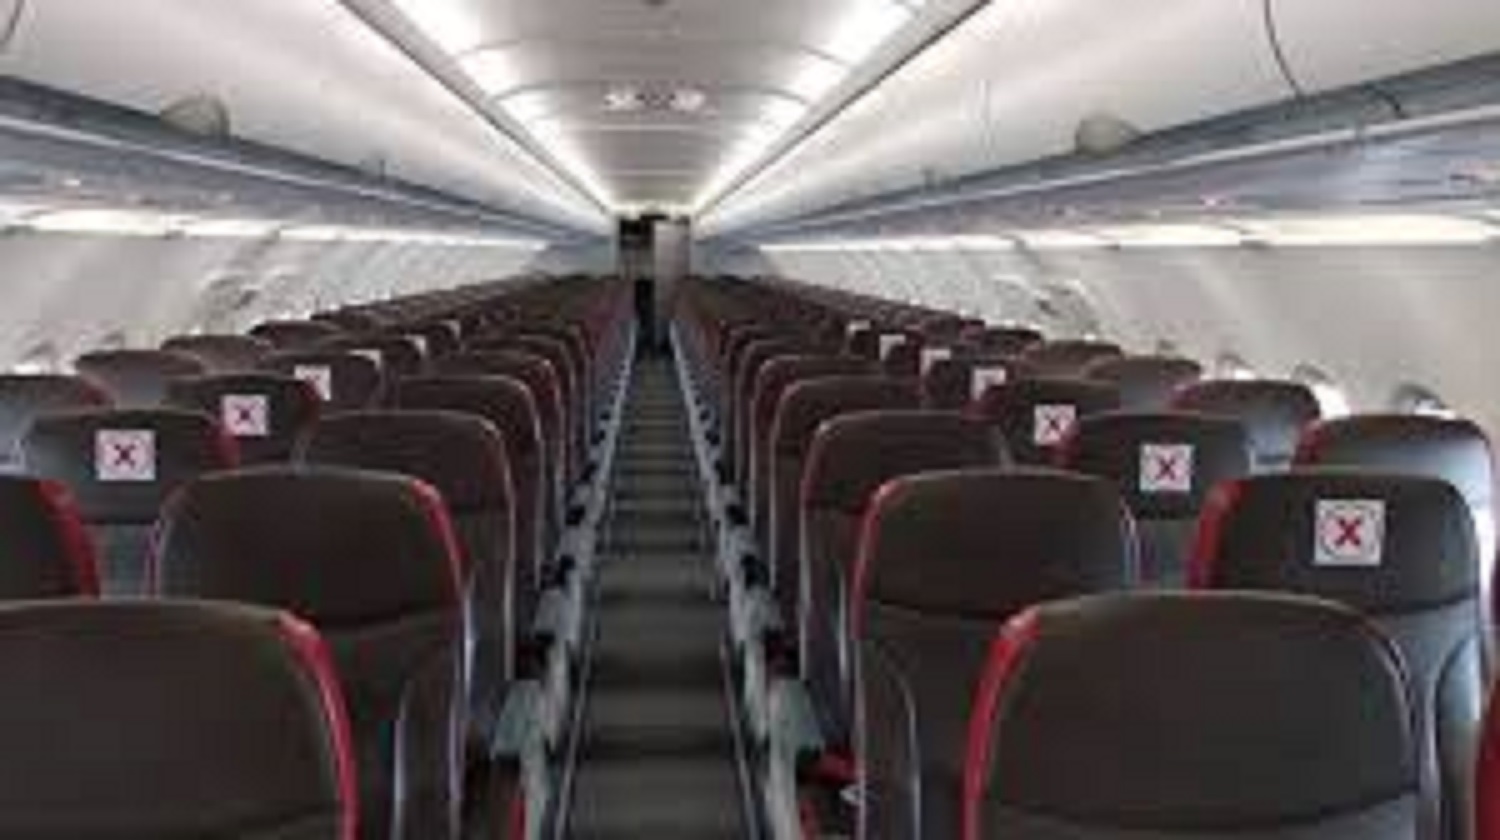 Idiosyncratic socialite Richard Muljadi booked all seats on Jakarta-Bali flight 